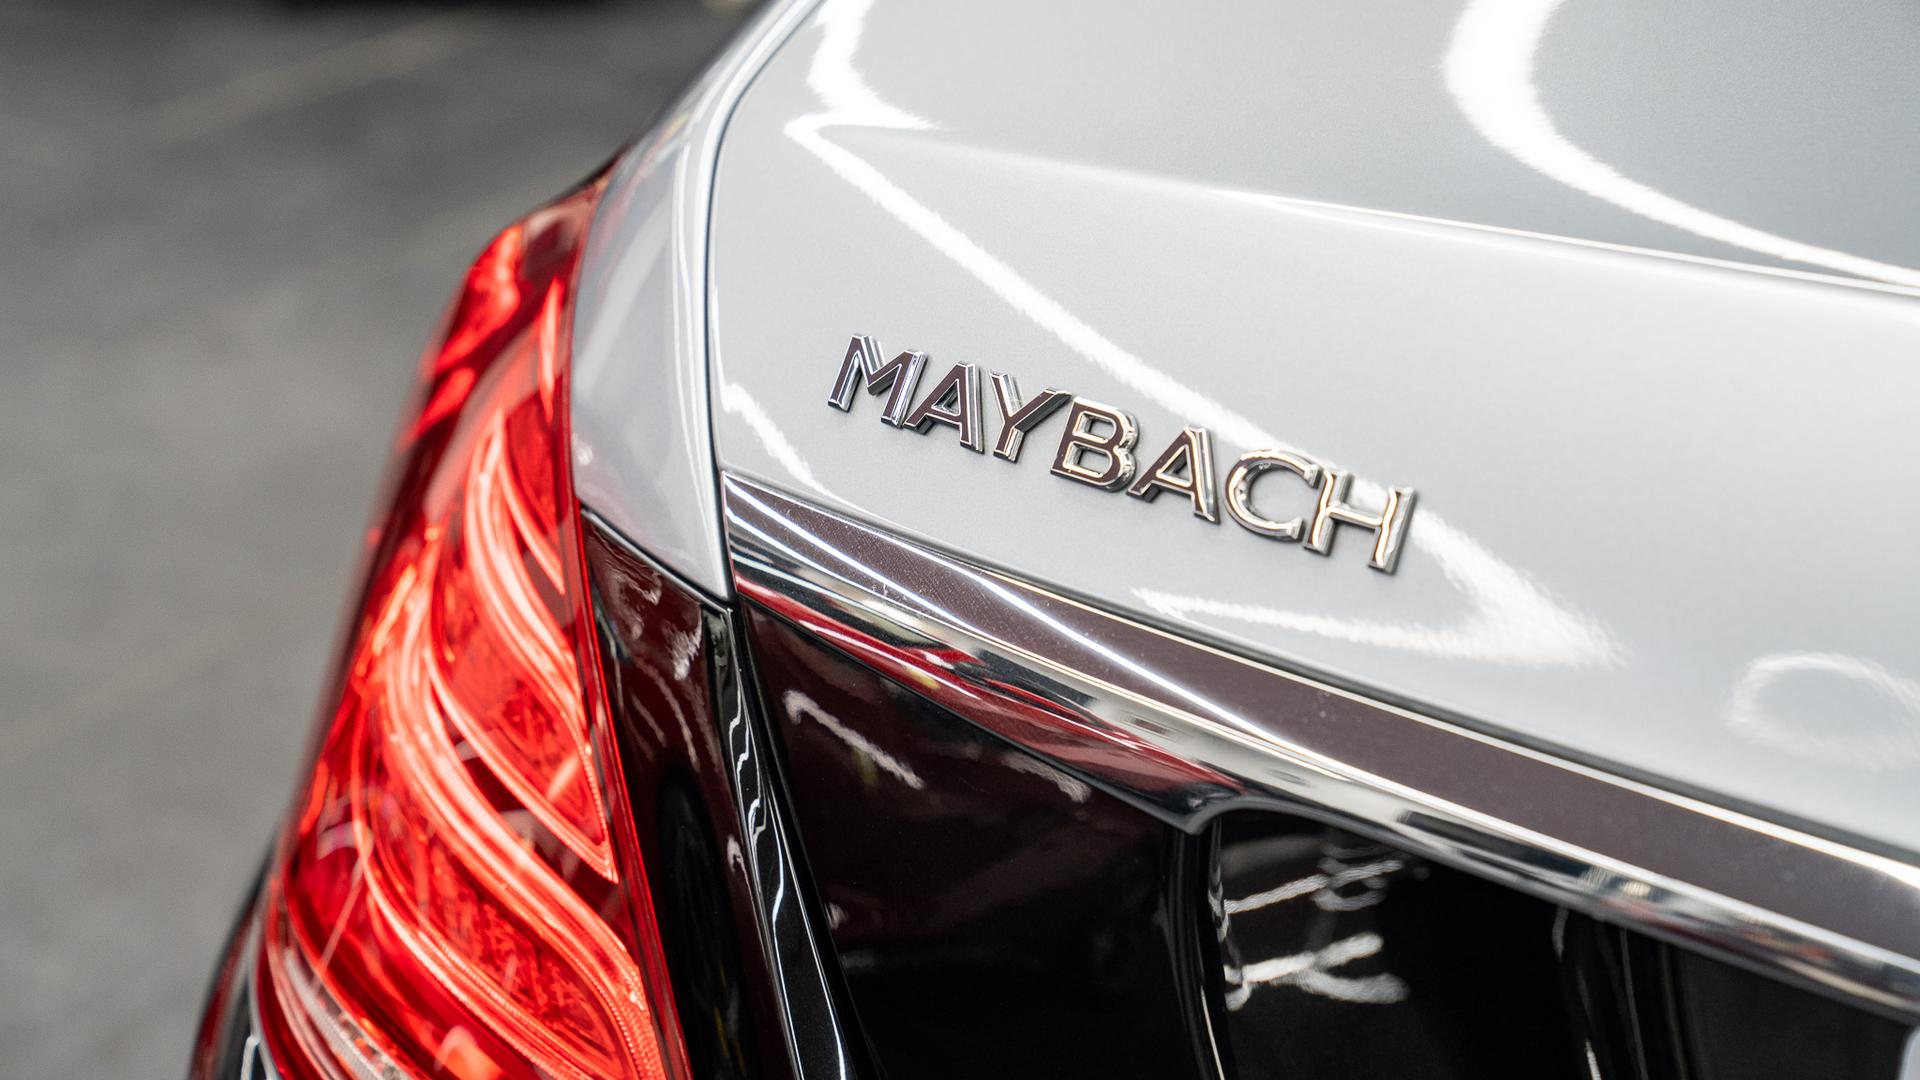 Mercedes-Benz Maybach S600 Photo ff8a9ed3-8ec3-4bf1-a63e-bf0f7258c72c.jpg